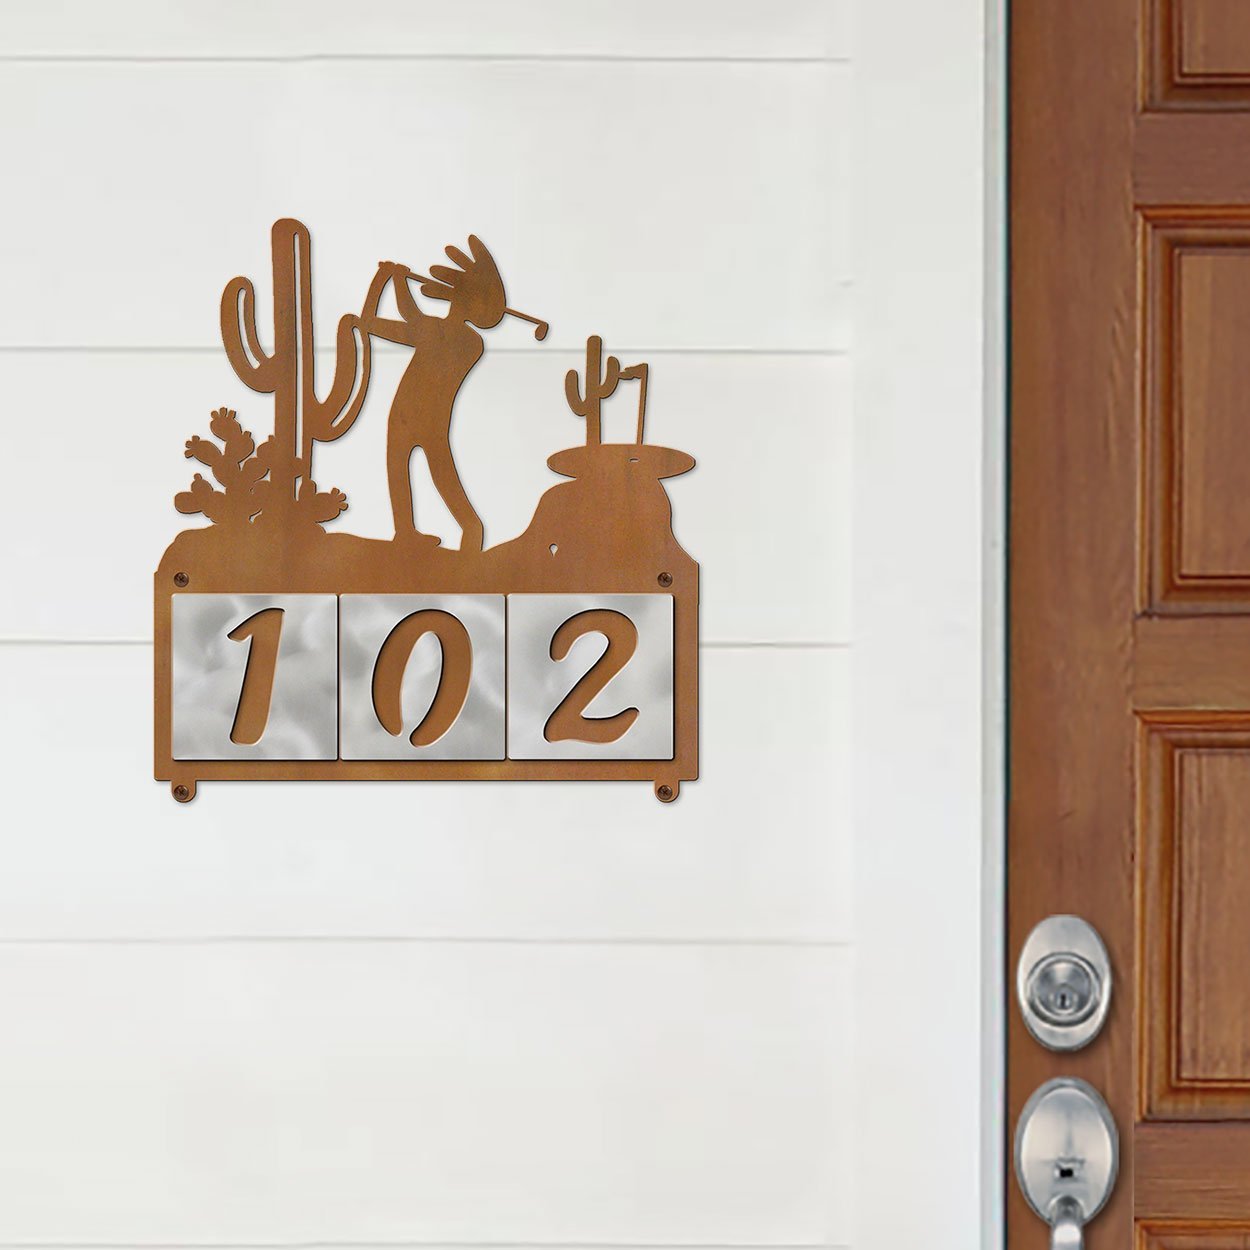 607133 - Kokopelli Desert Golfer Design 3-Digit Horizontal 4-inch Tile Outdoor House Numbers